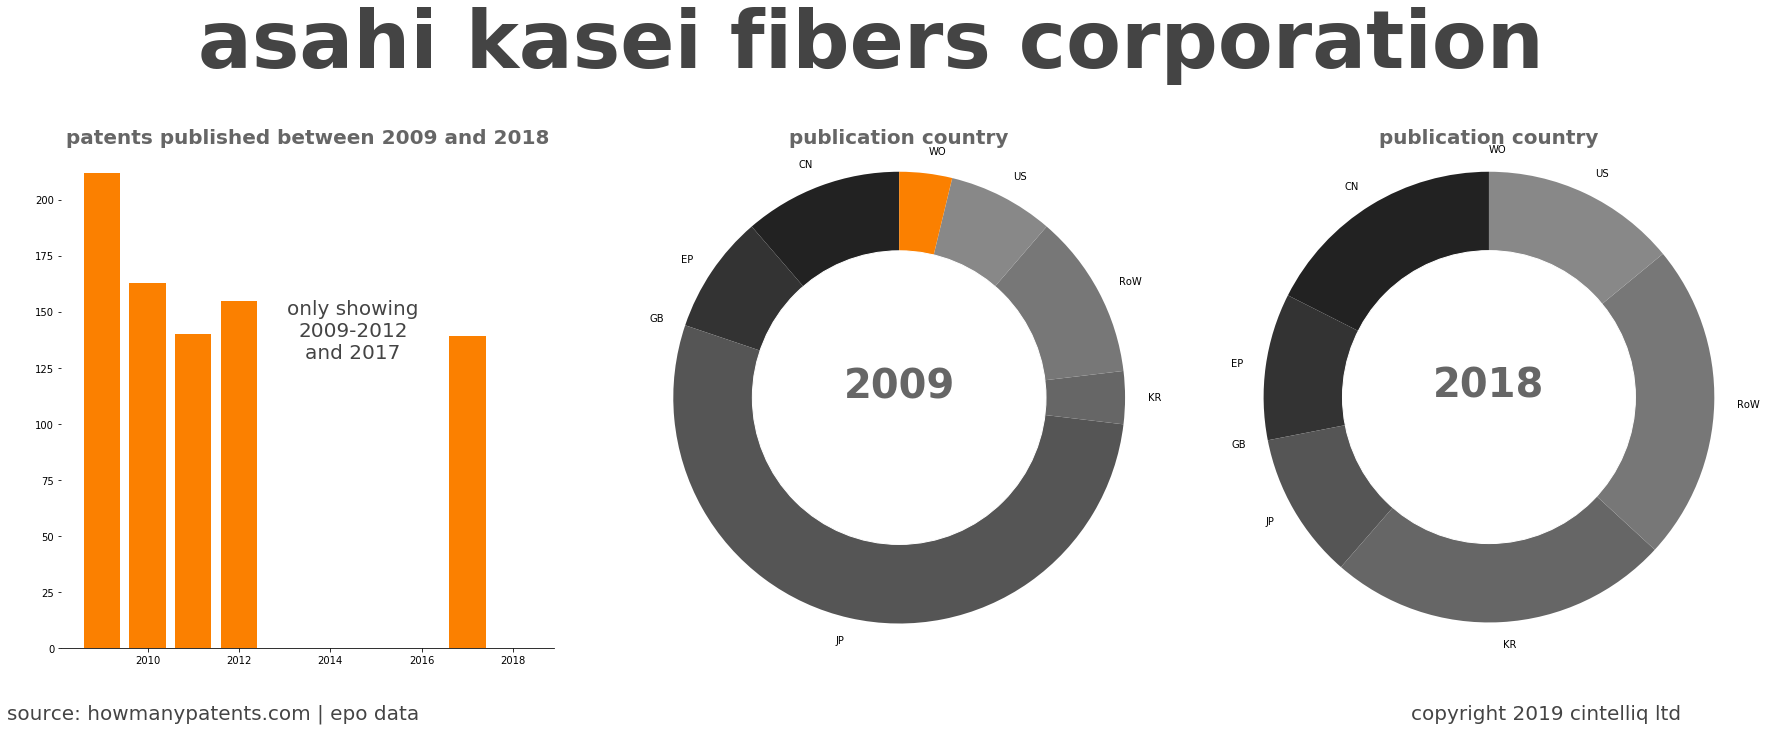 summary of patents for Asahi Kasei Fibers Corporation